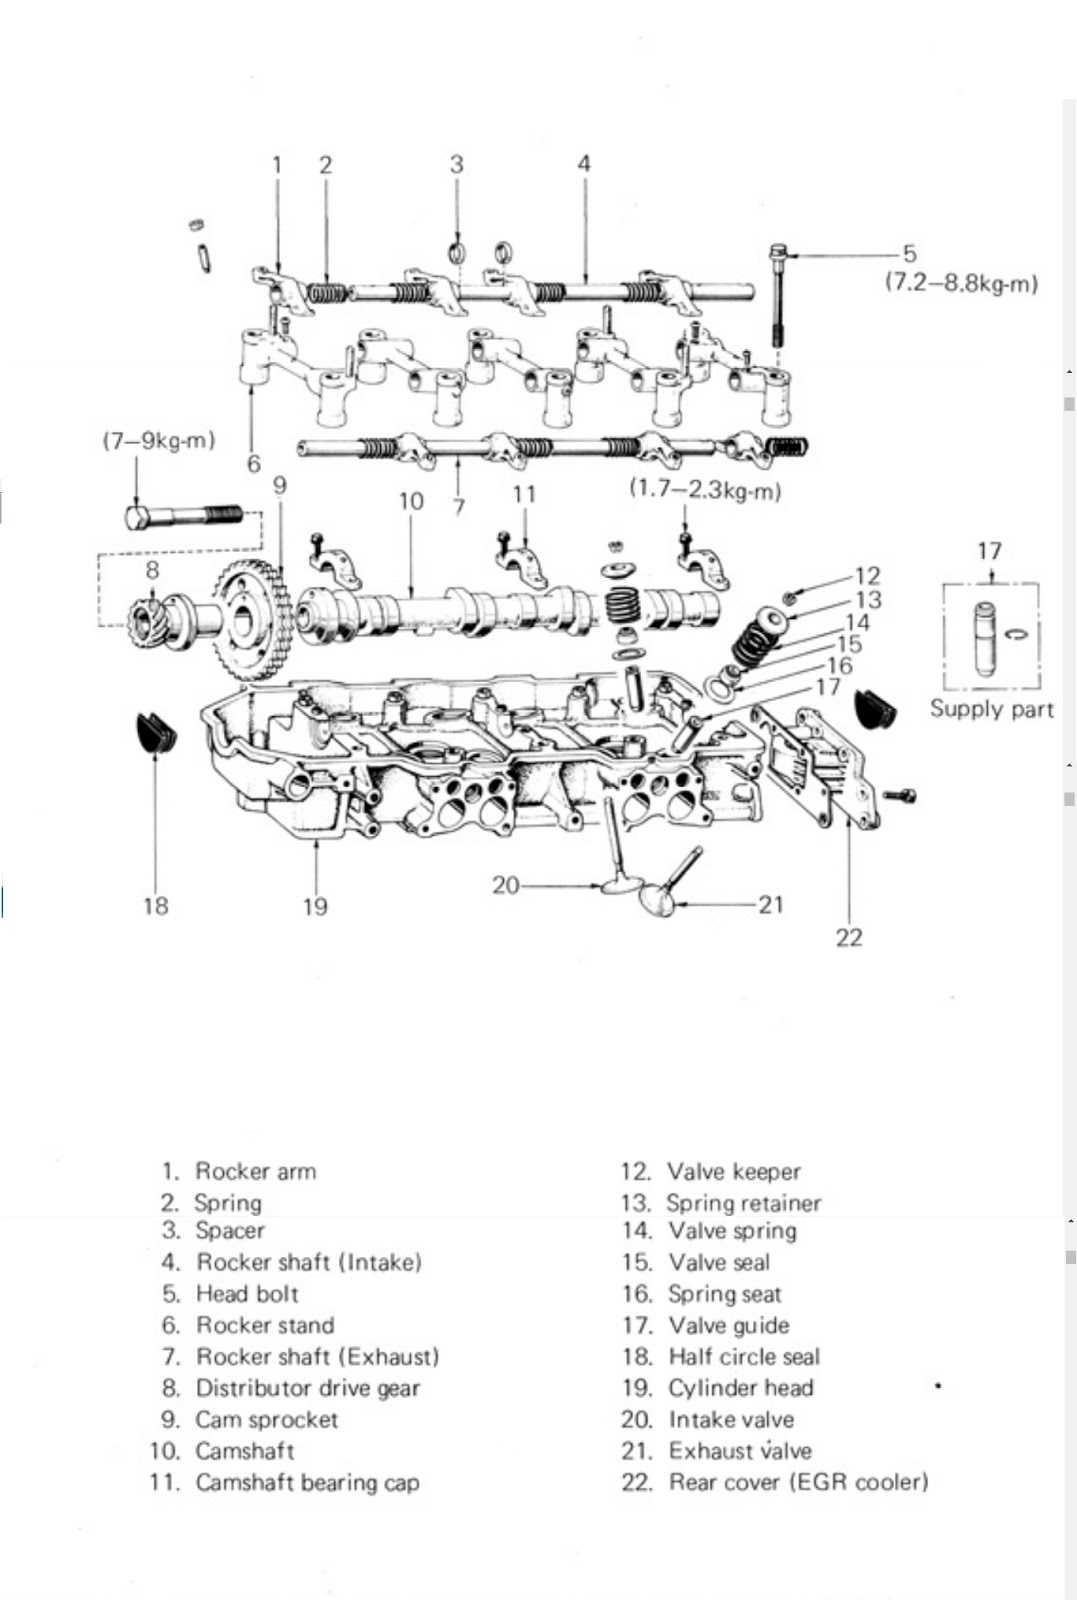 Toyota Engine Diagram ,Find Here - Aseplinggis.com